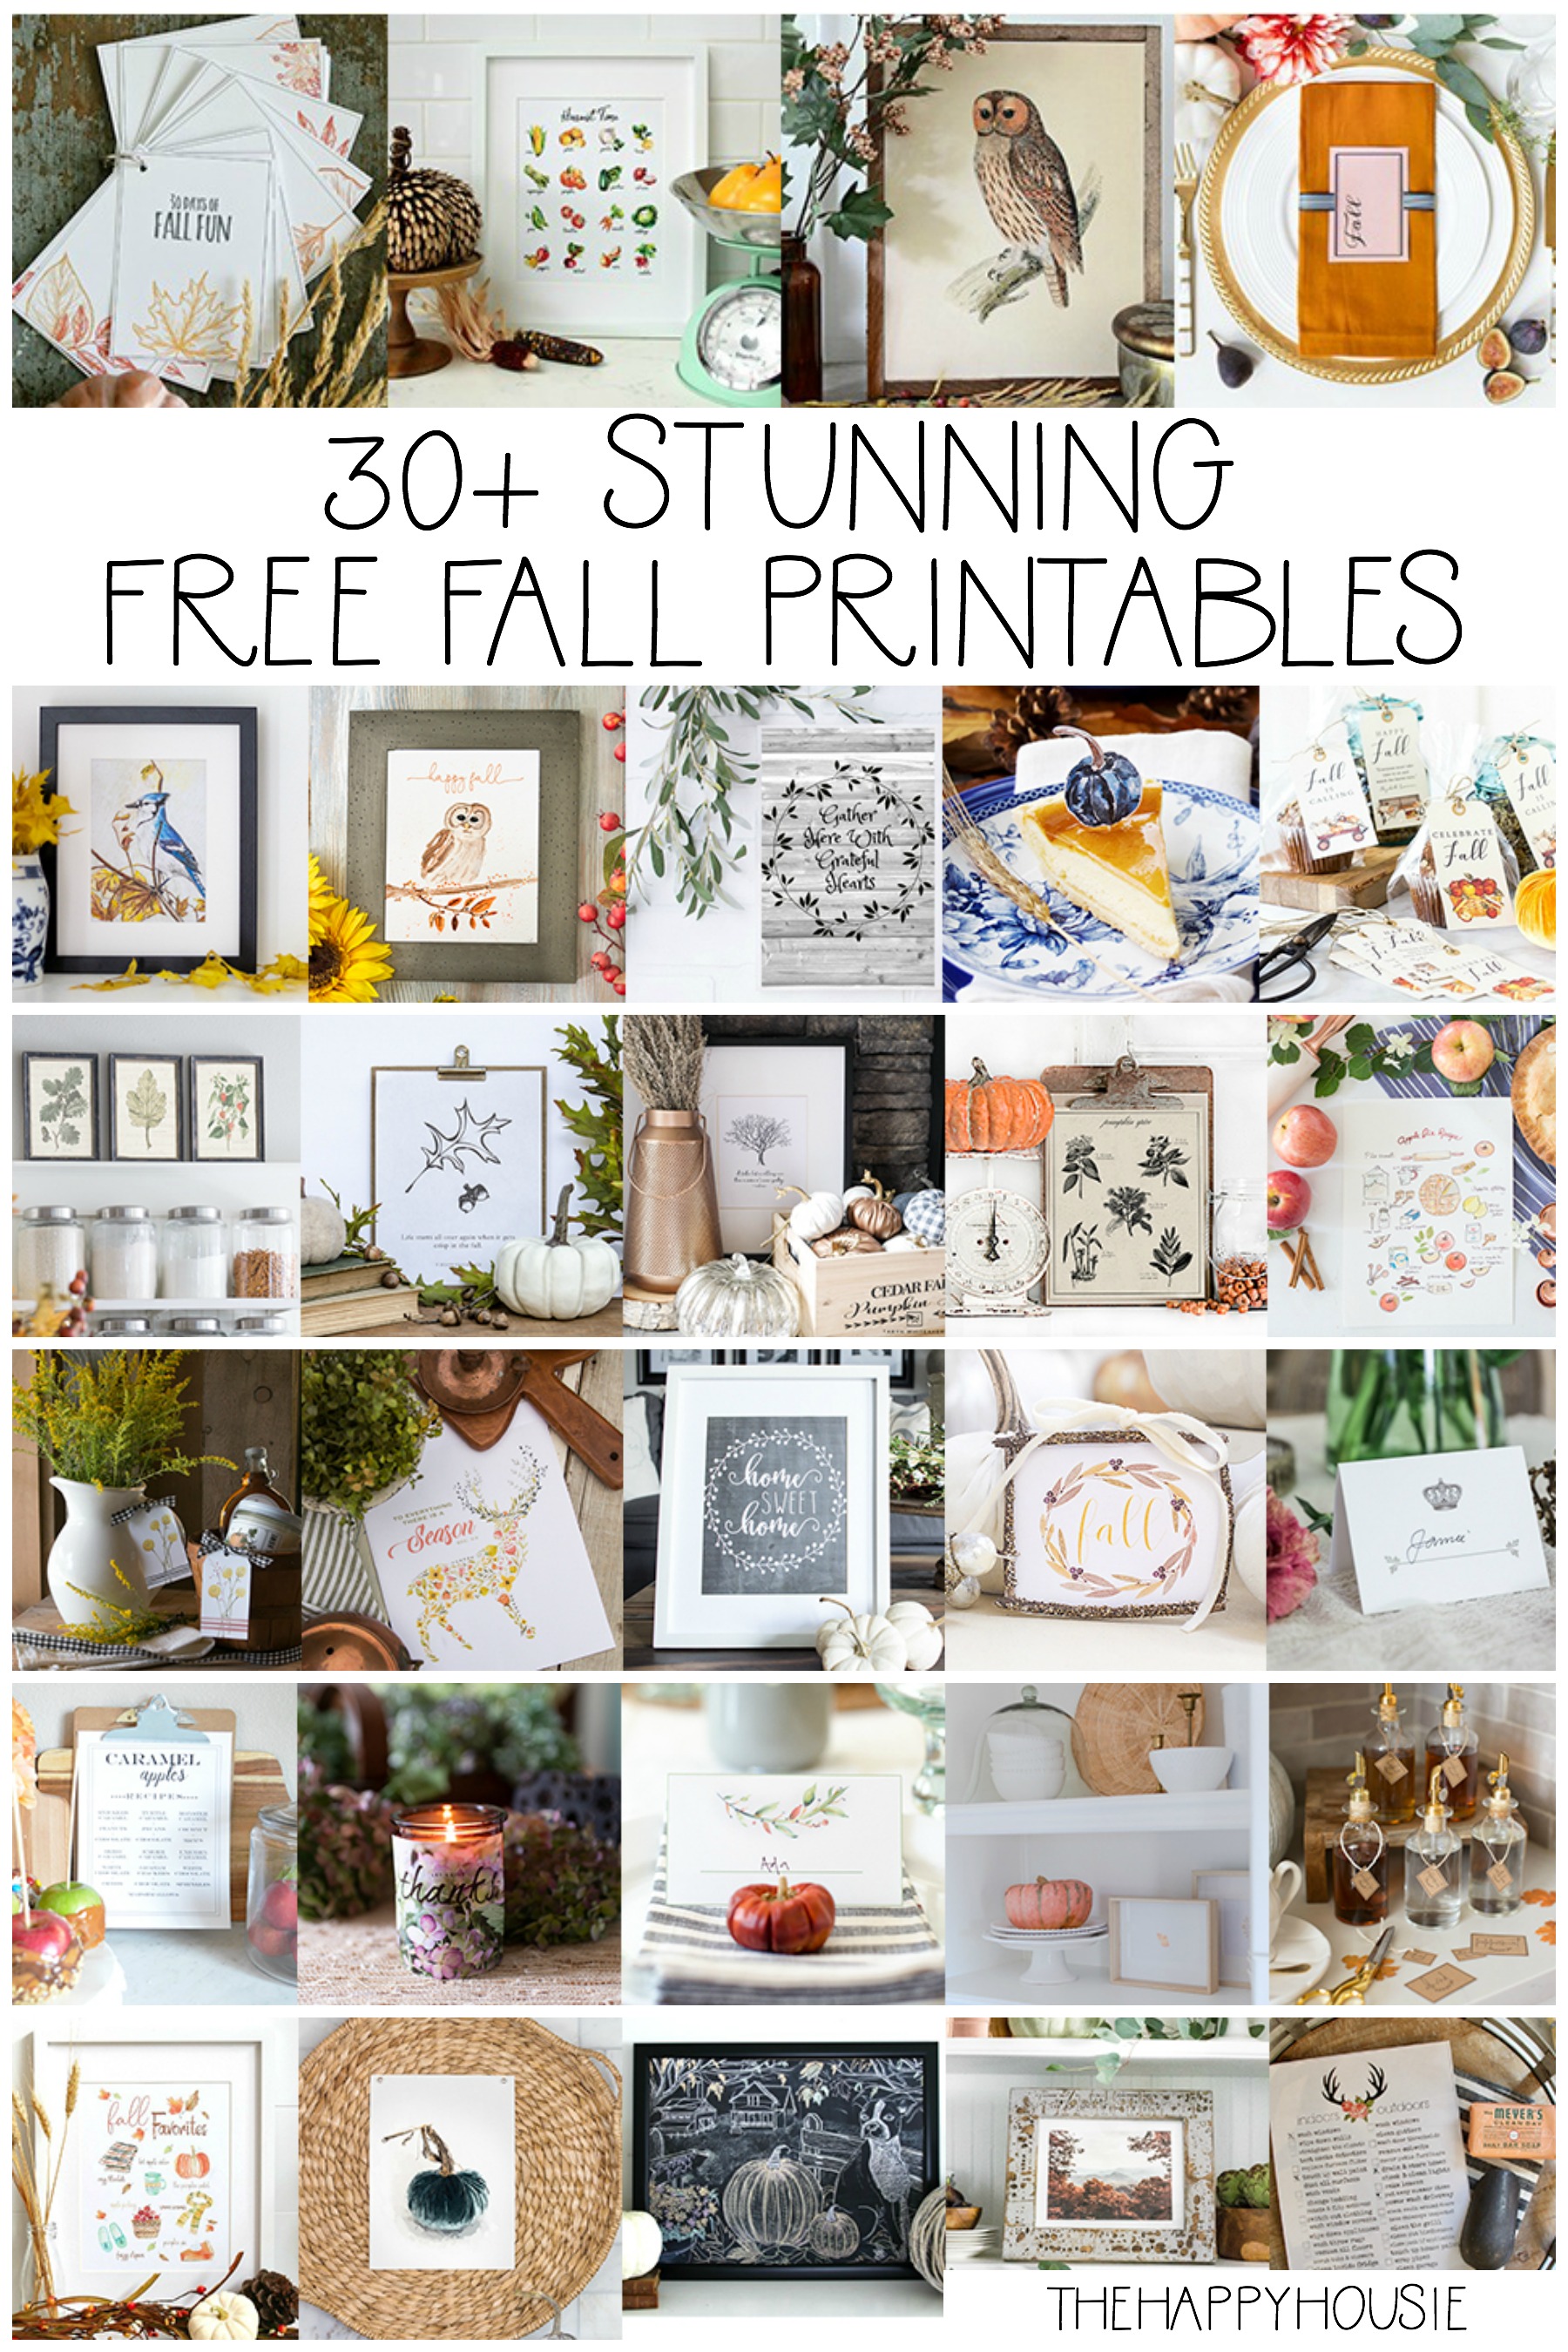 30+ Stunning Free Fall Printables poster.